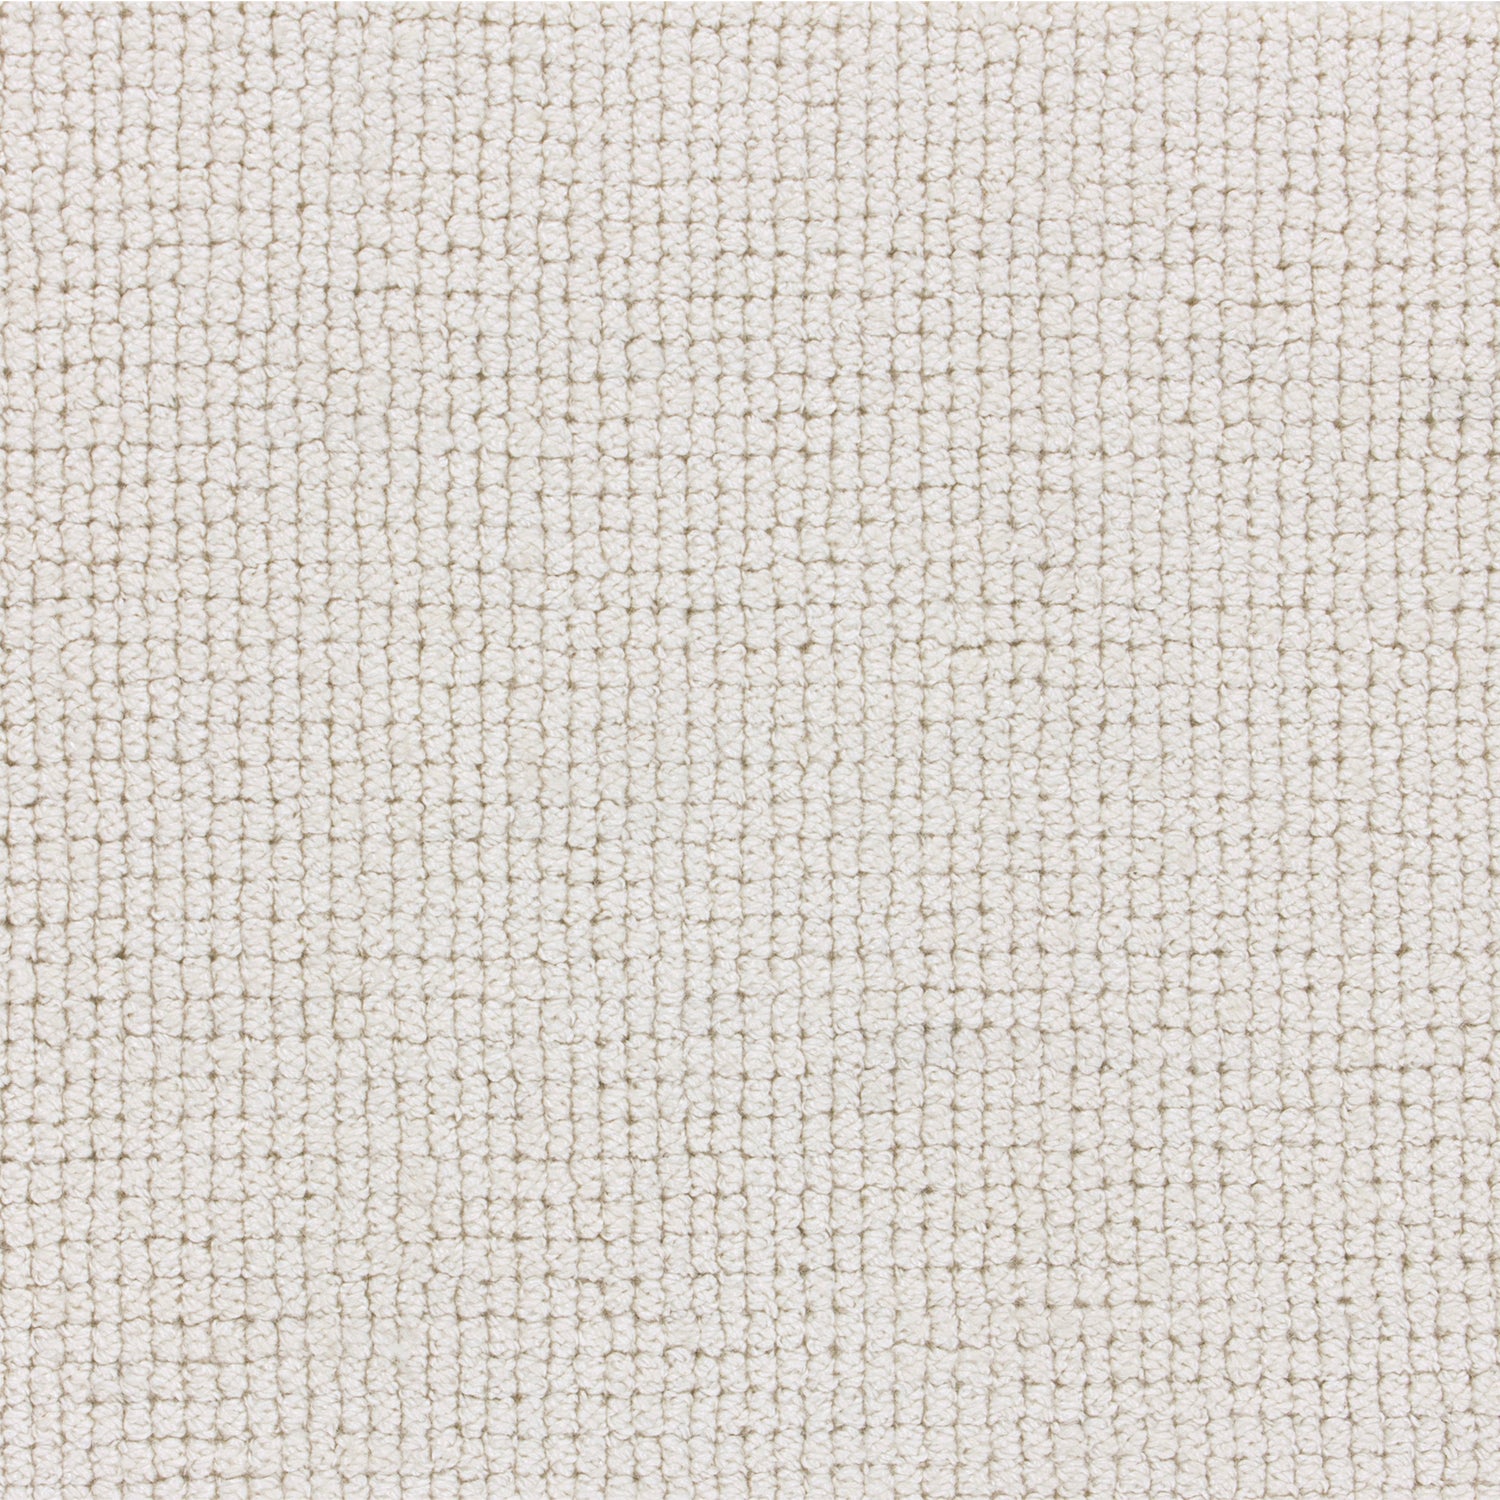 Wool-blend broadloom carpet swatch in a looped weave in ivory.